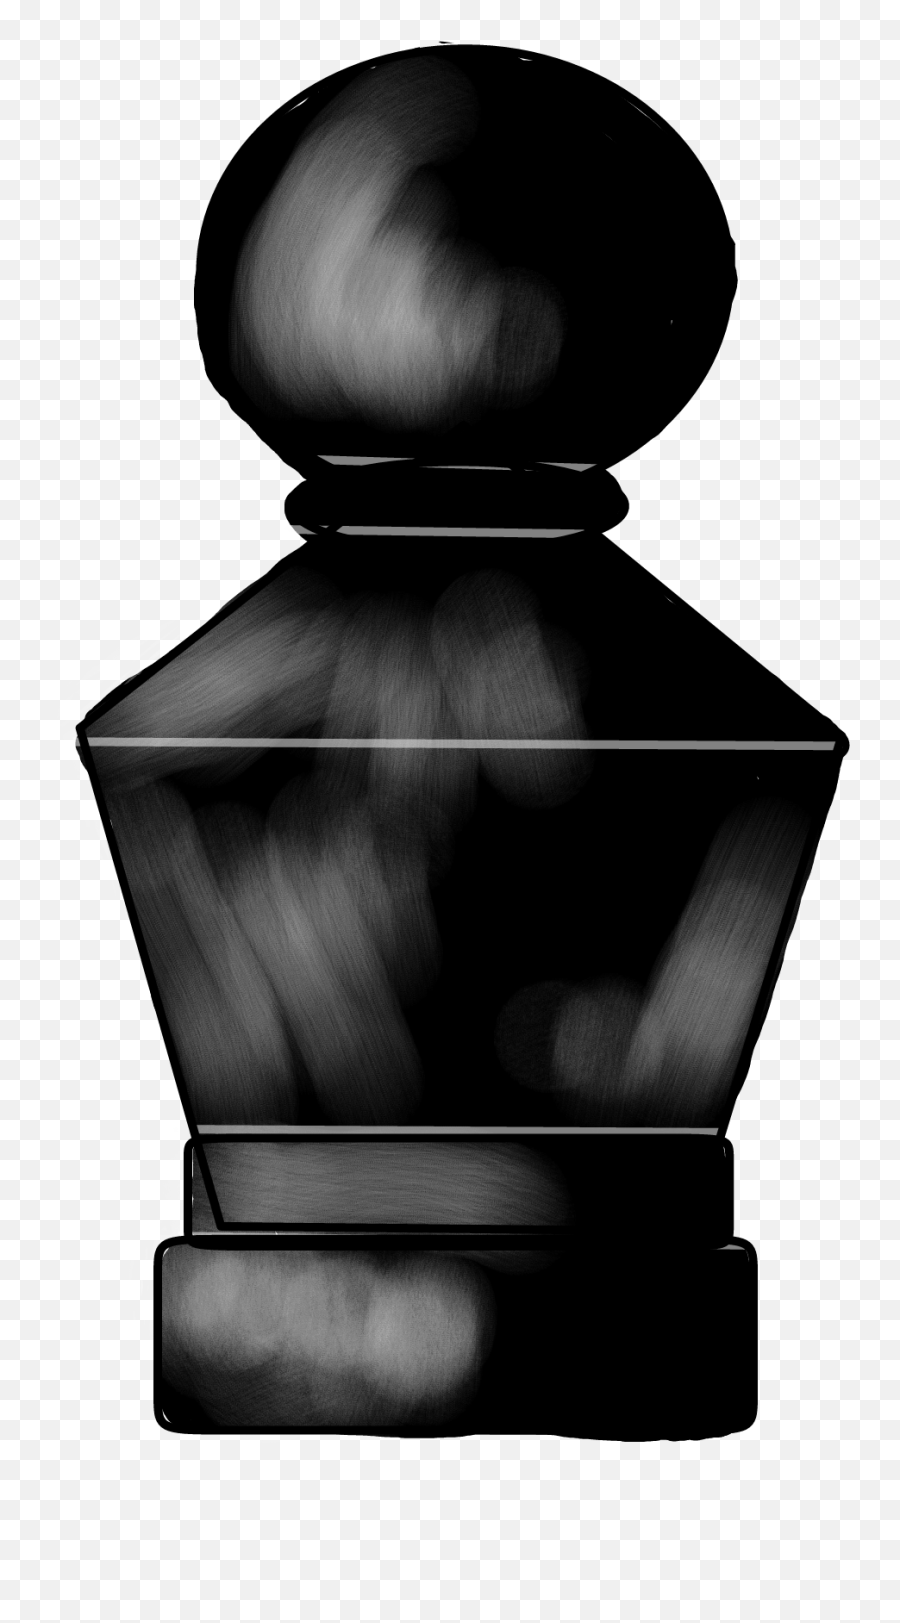 The Most Edited 106 Picsart Emoji,Chess Pawn Emoji